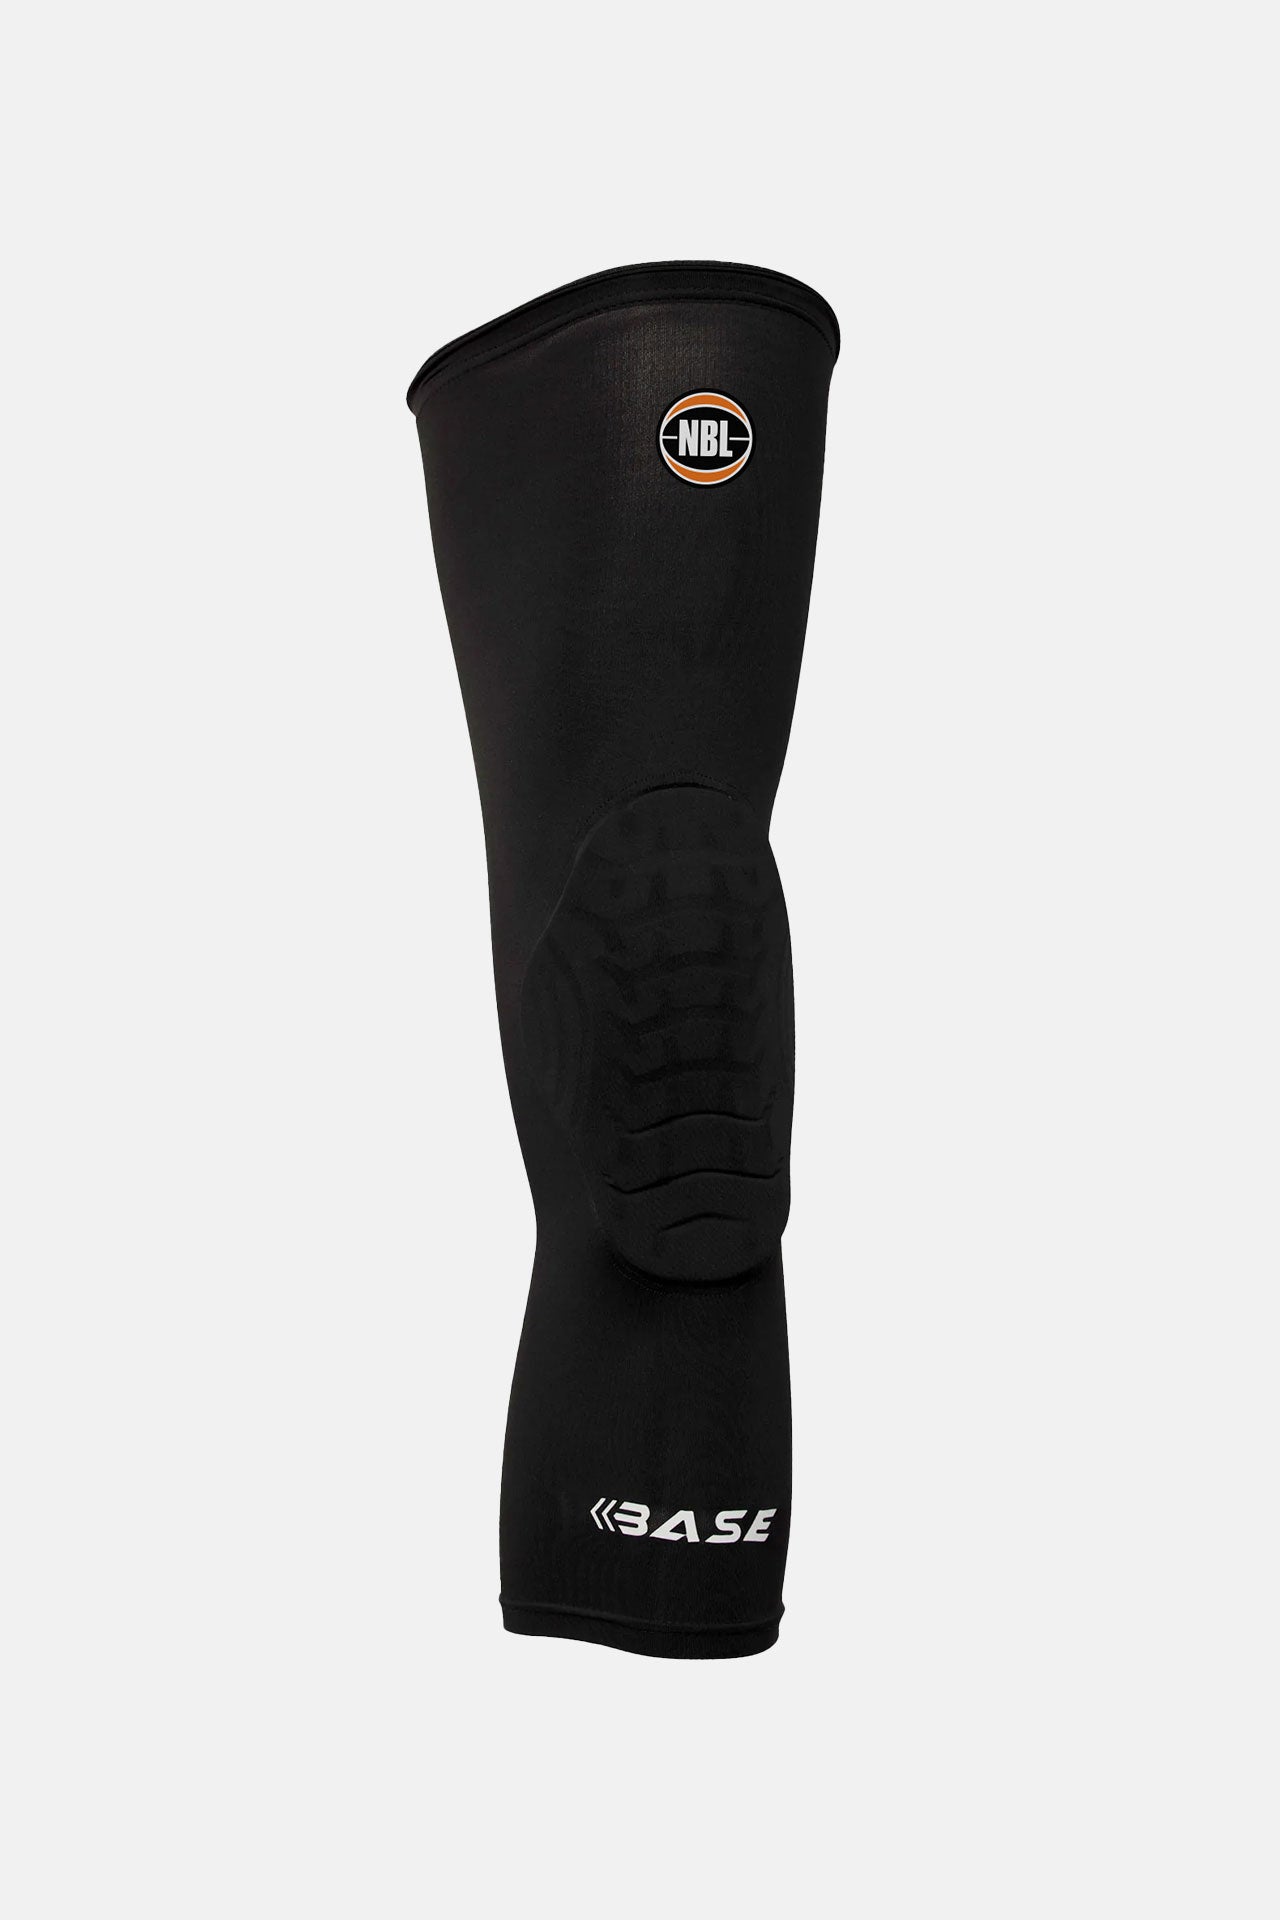 BASE + NBL Compression Padded Knee Guard (Single) - Black